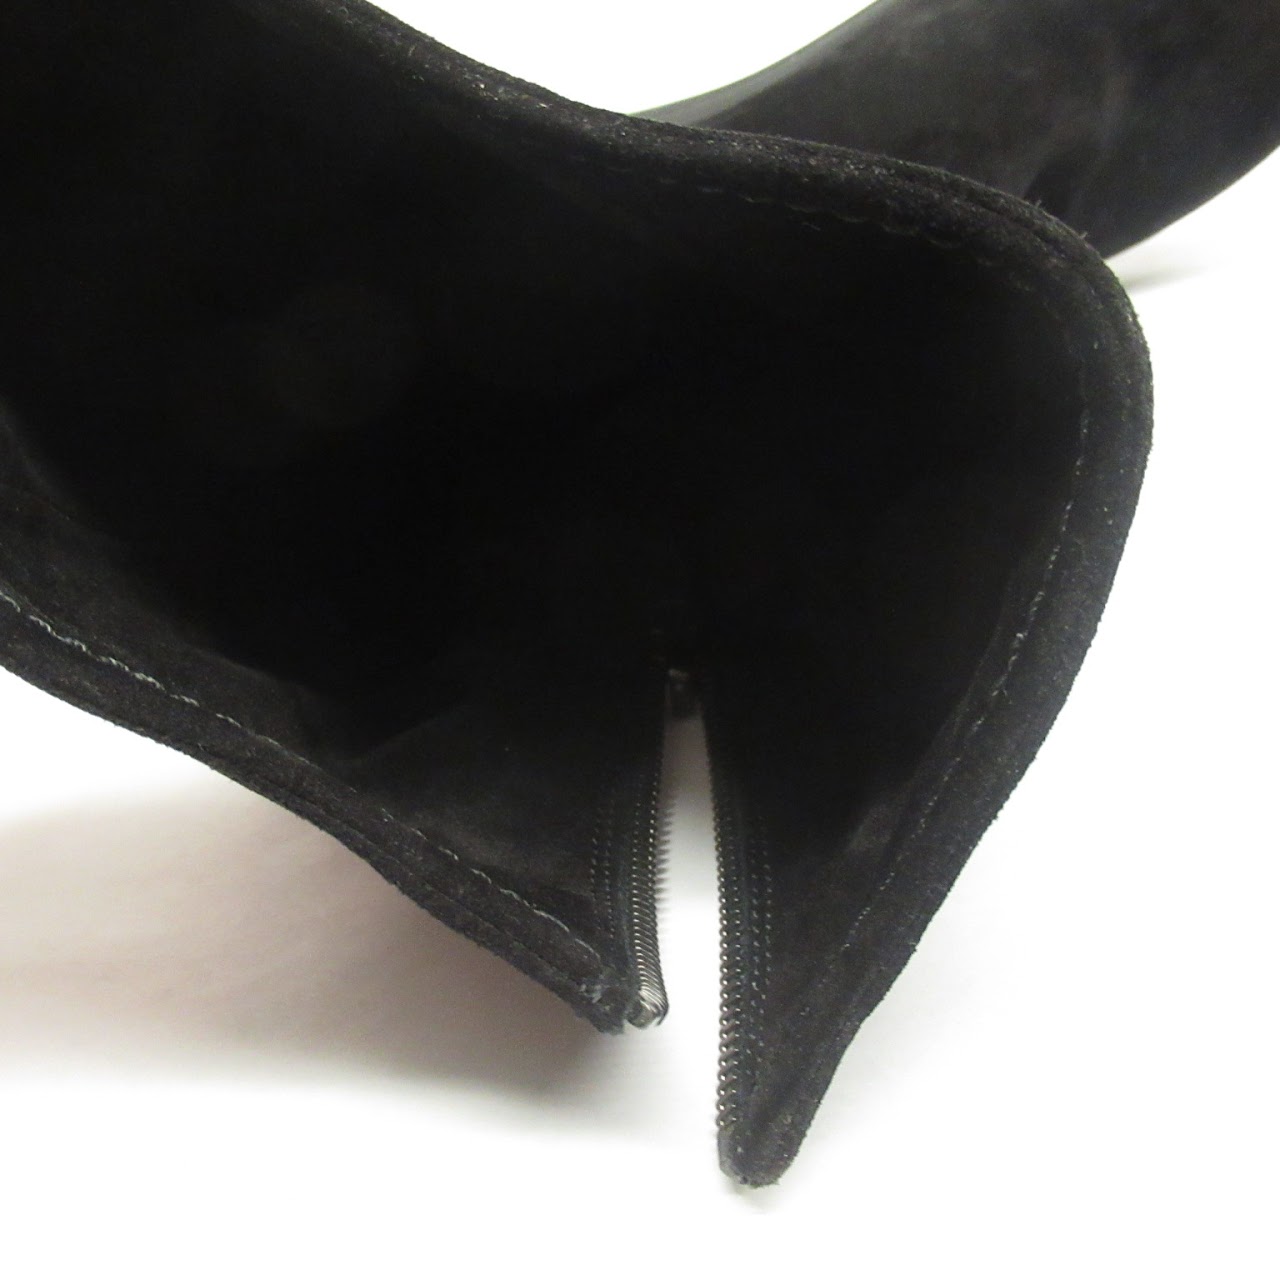 Prada Suede Leather Calf Boots